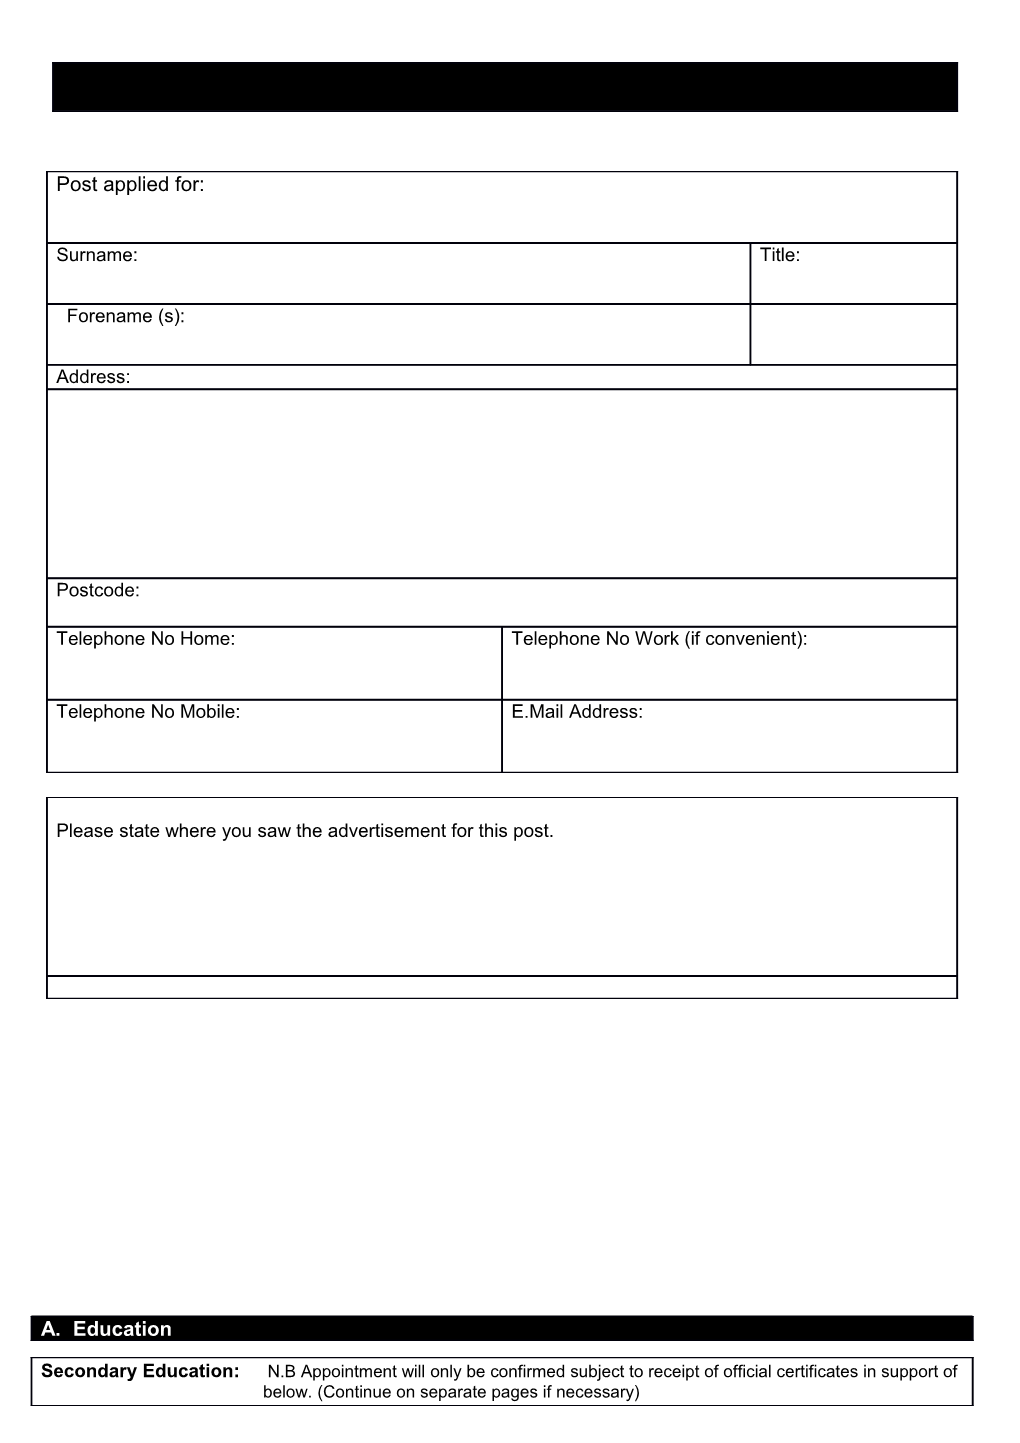 Newcastle Gateshead Initiative Application Form